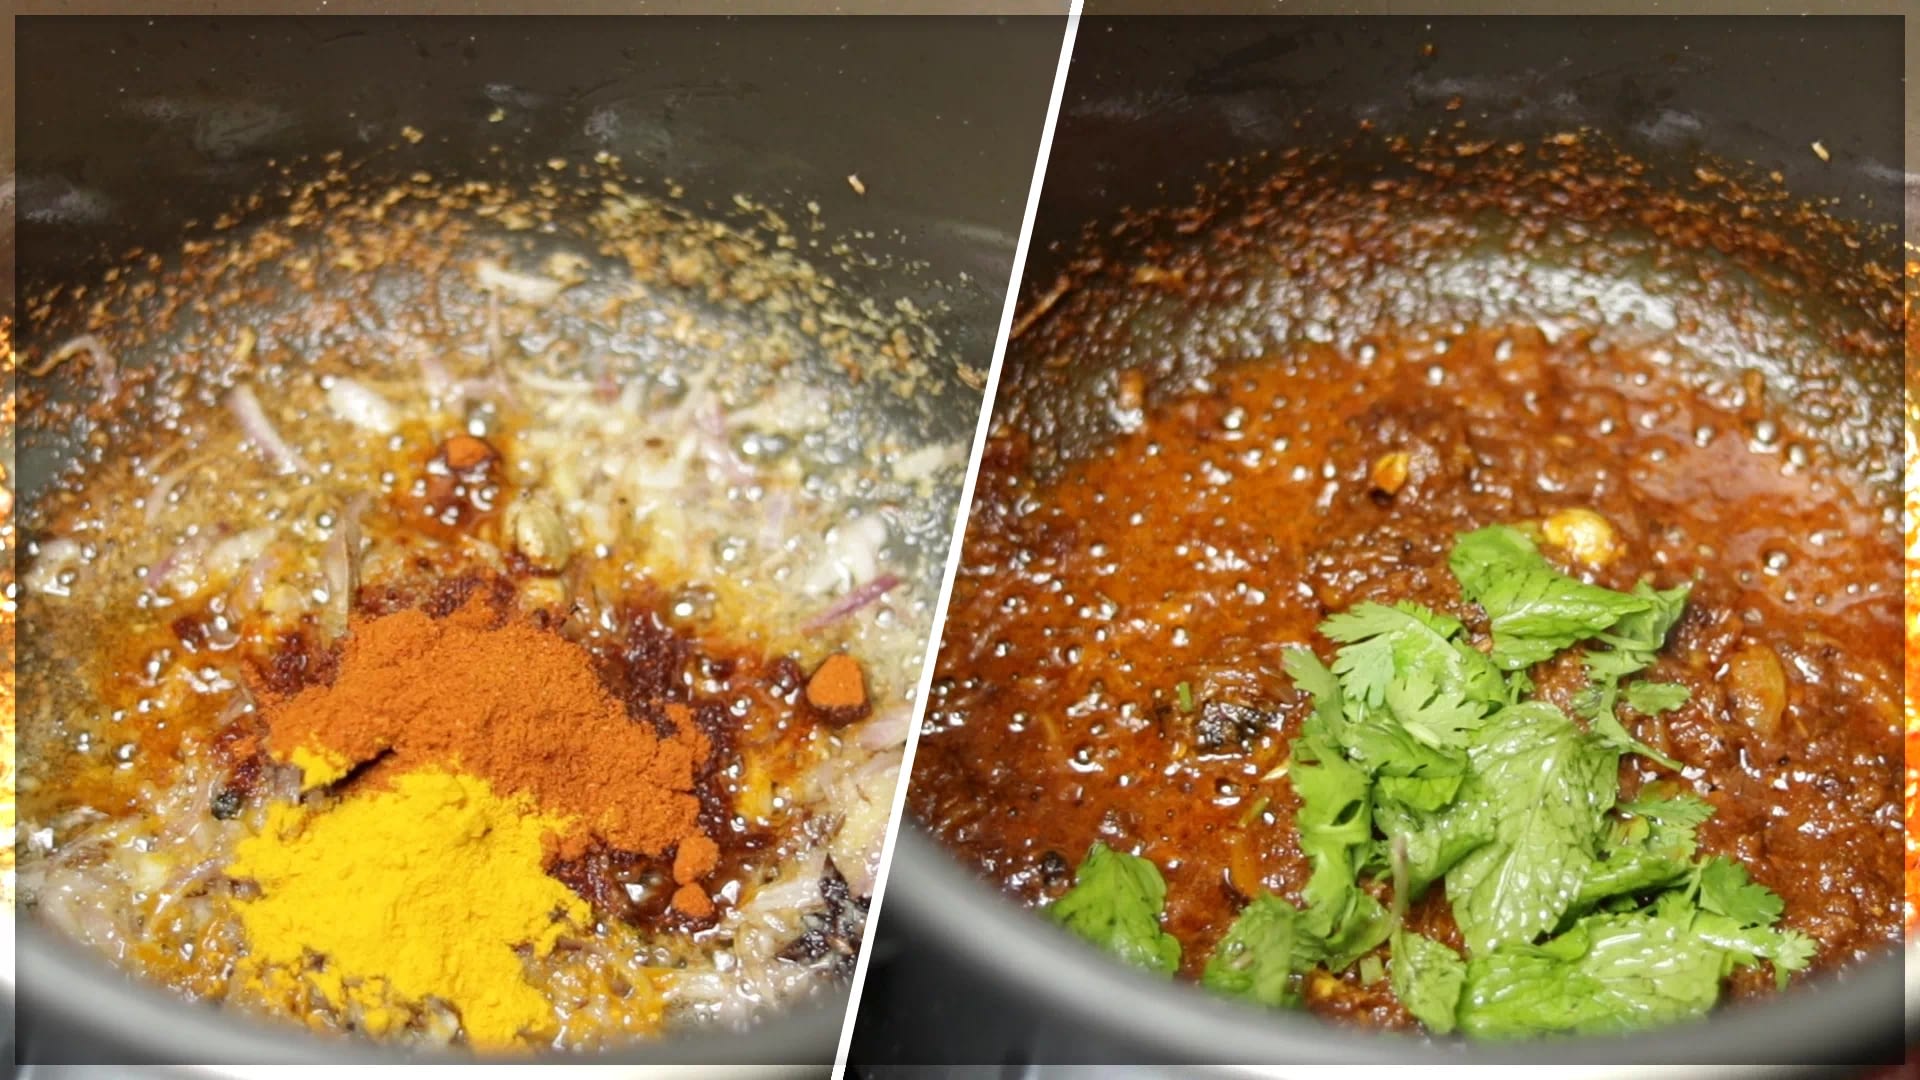 Chili and Turmeric Powder For Making Masala